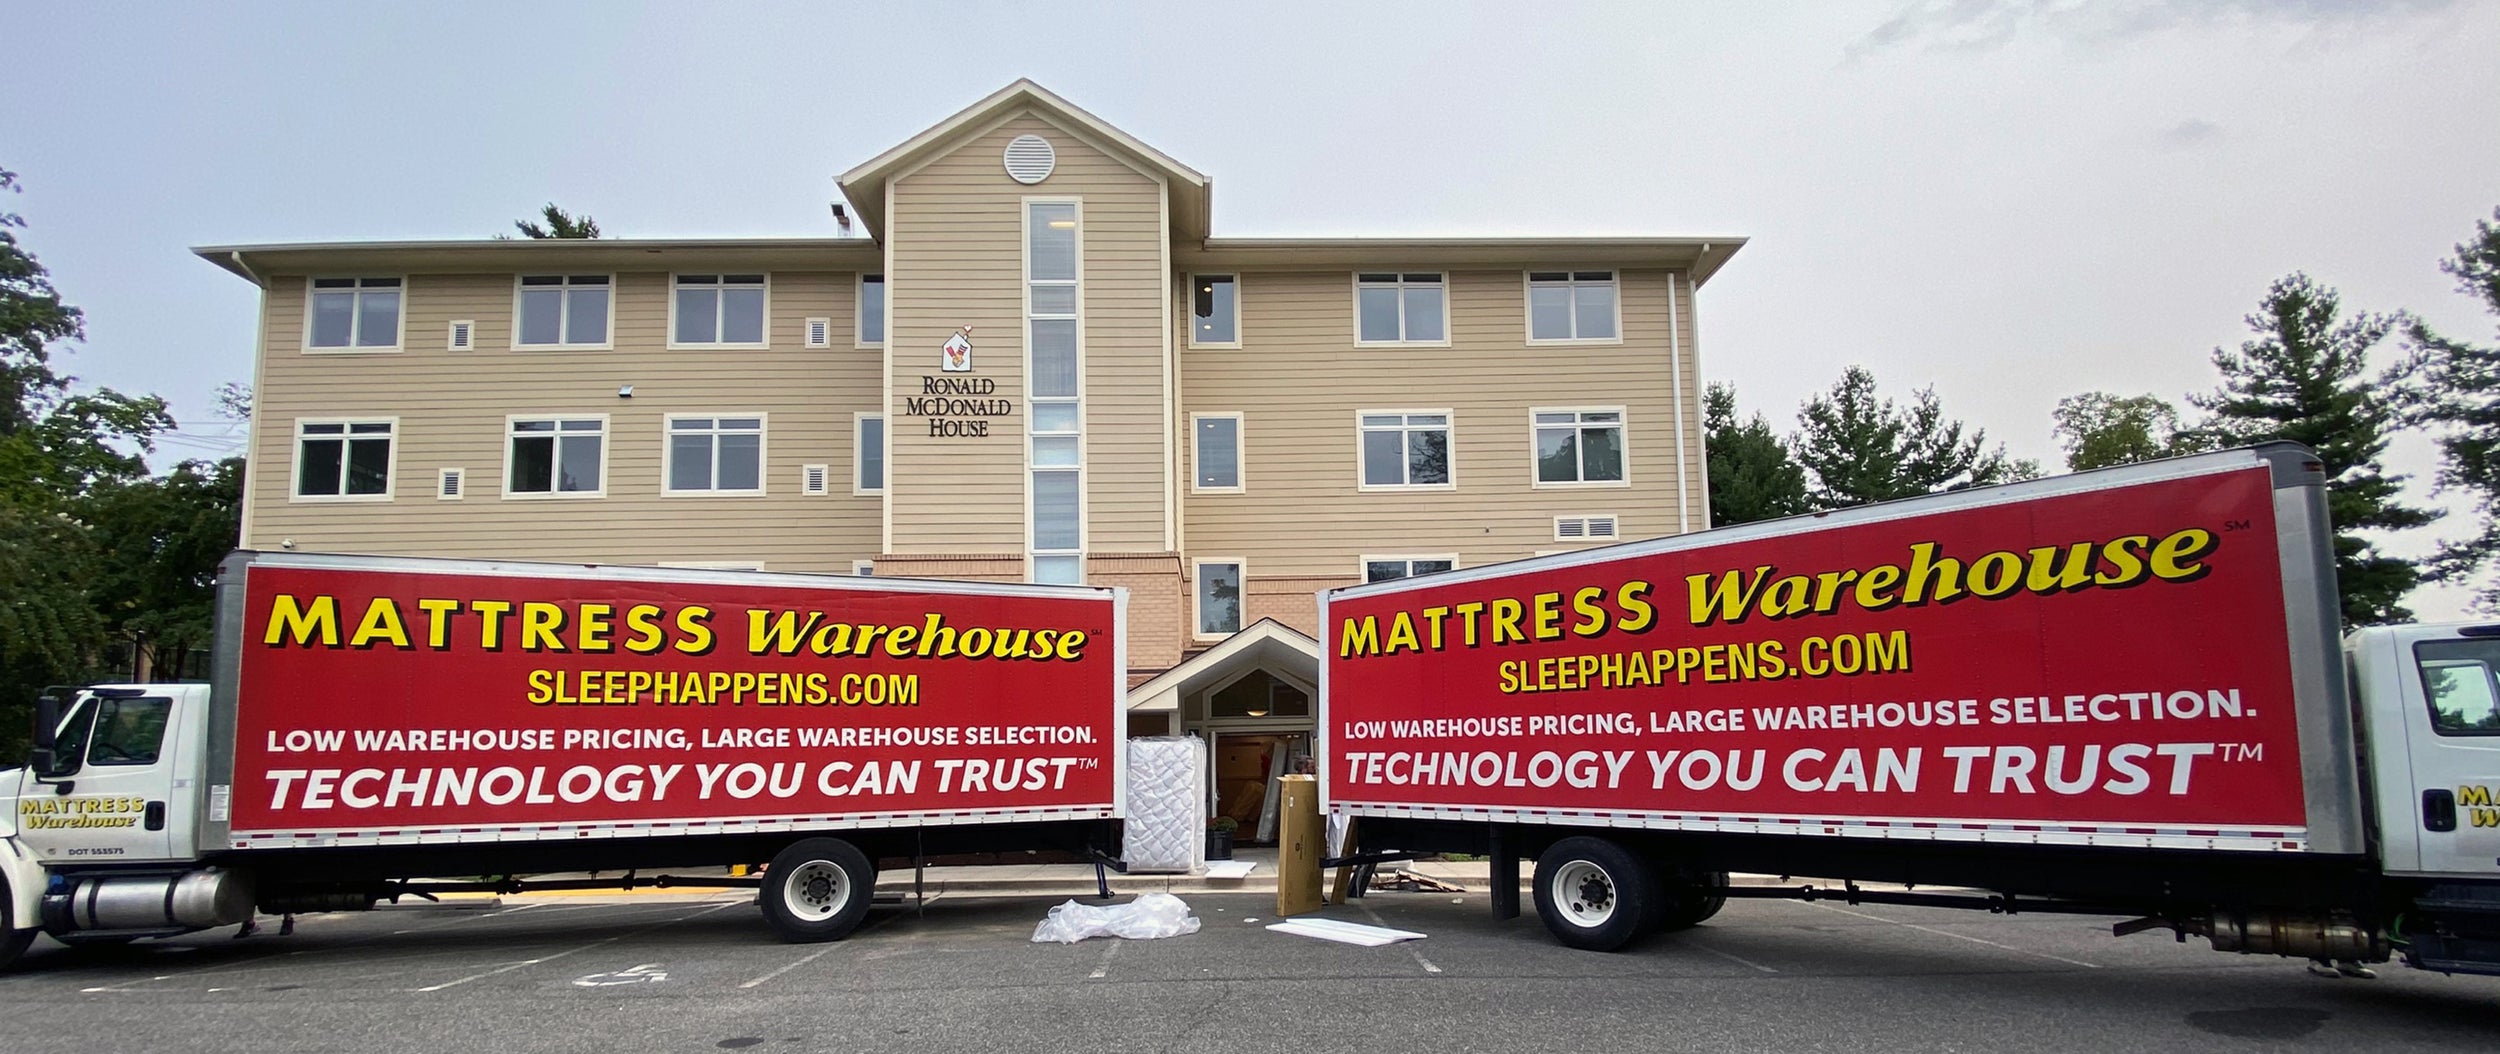 mattress warehouse bed extended warranty